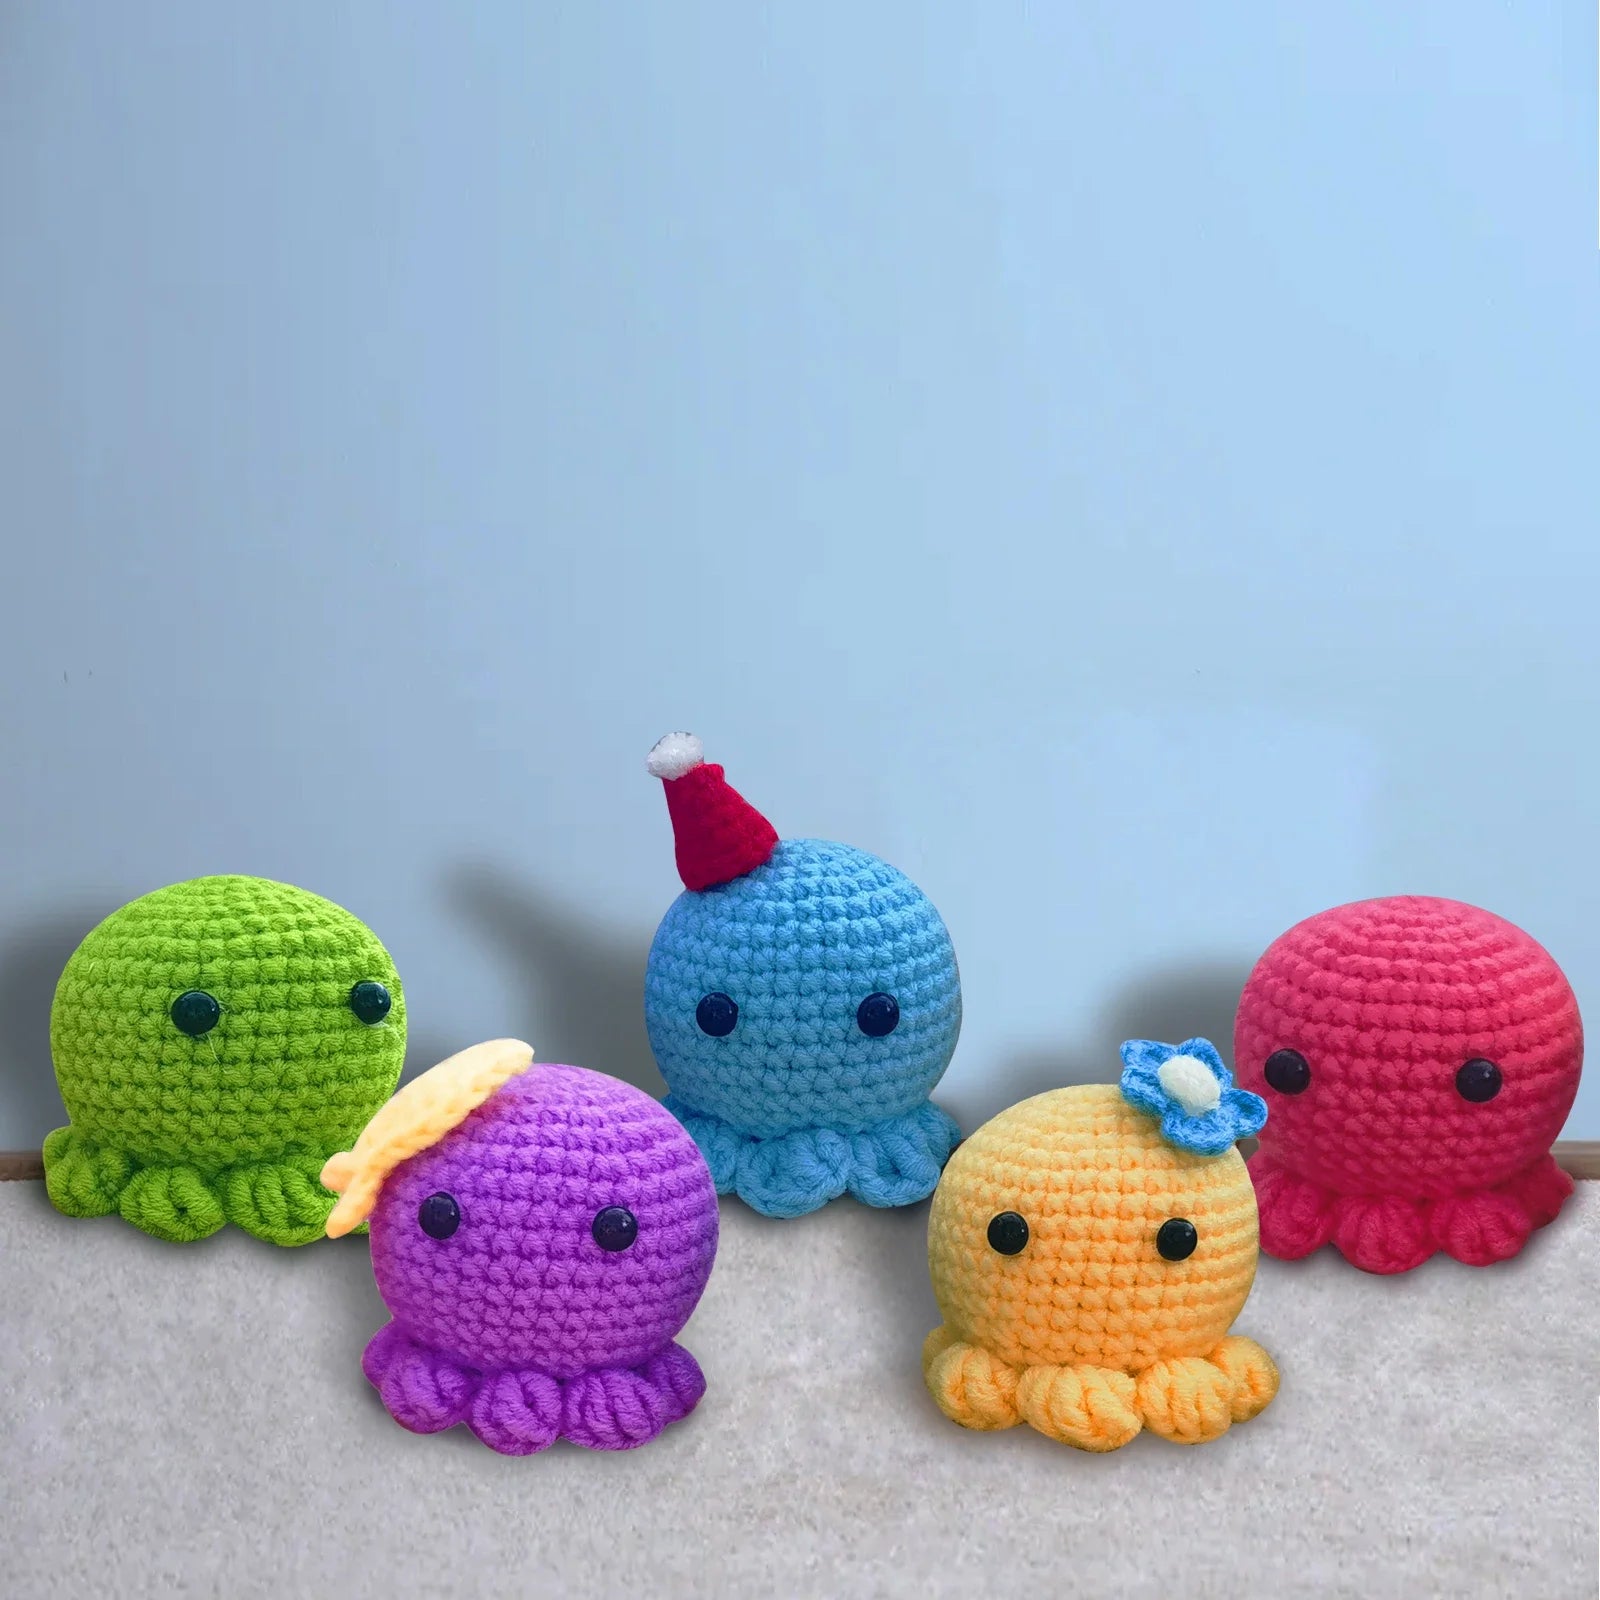 Crochet Kit for Beginners Small Octopus Crochet Knitting Kit Adorable Animal Crochet Starter Pack with 5 Colors Thread Stuffing - IHavePaws